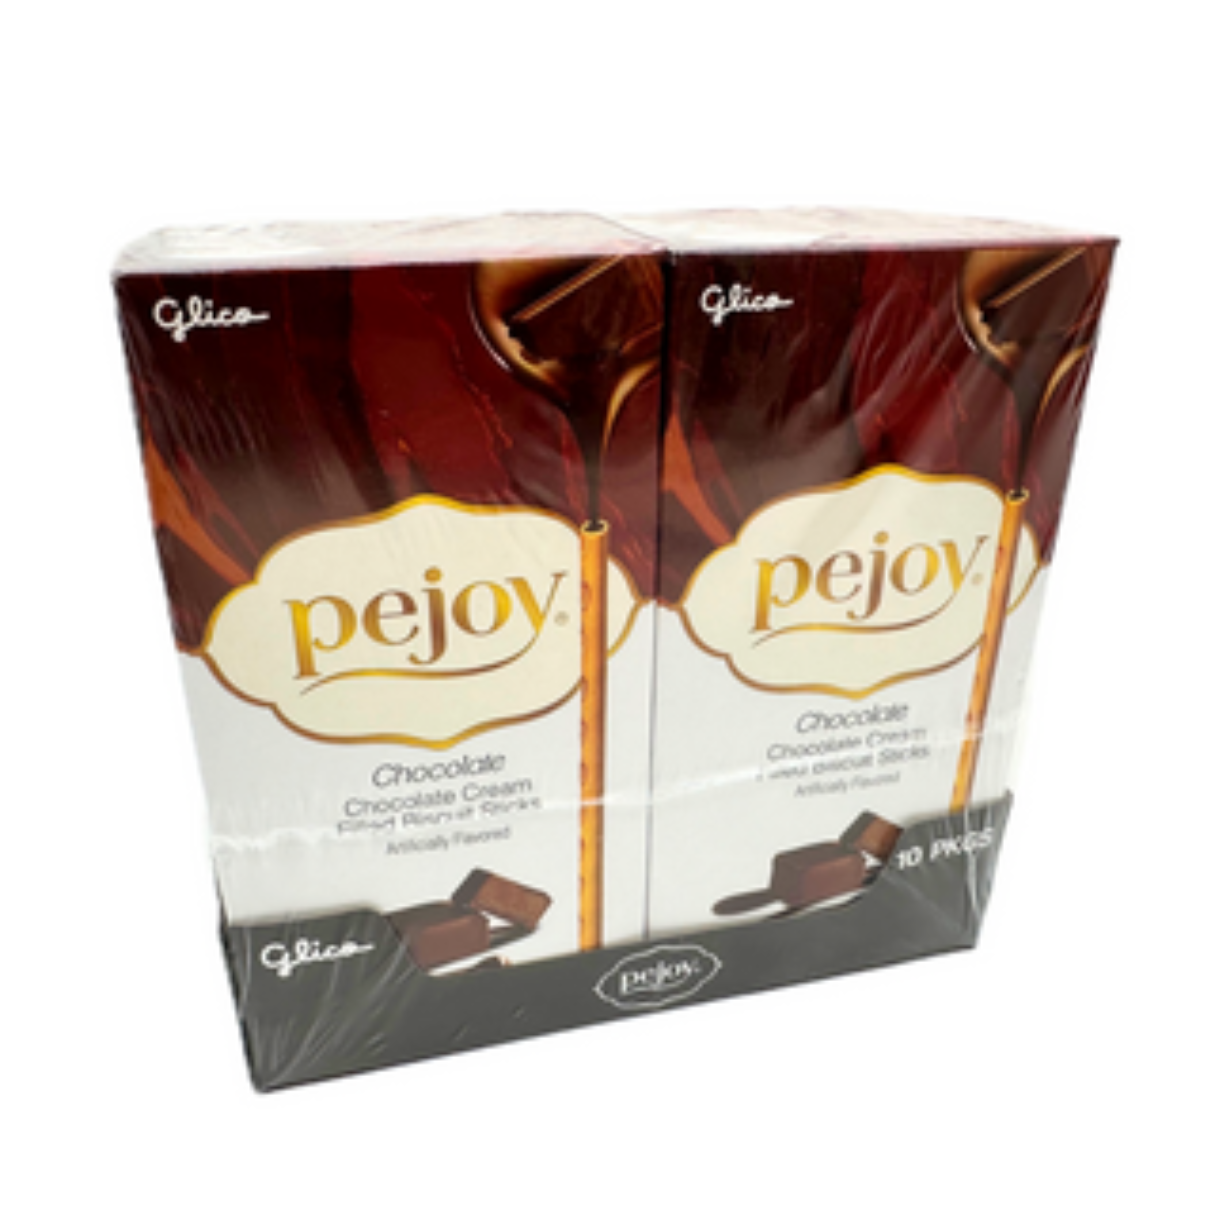 Glico Pejoy Chocolate Biscuit Sticks  1.98oz - 10ct